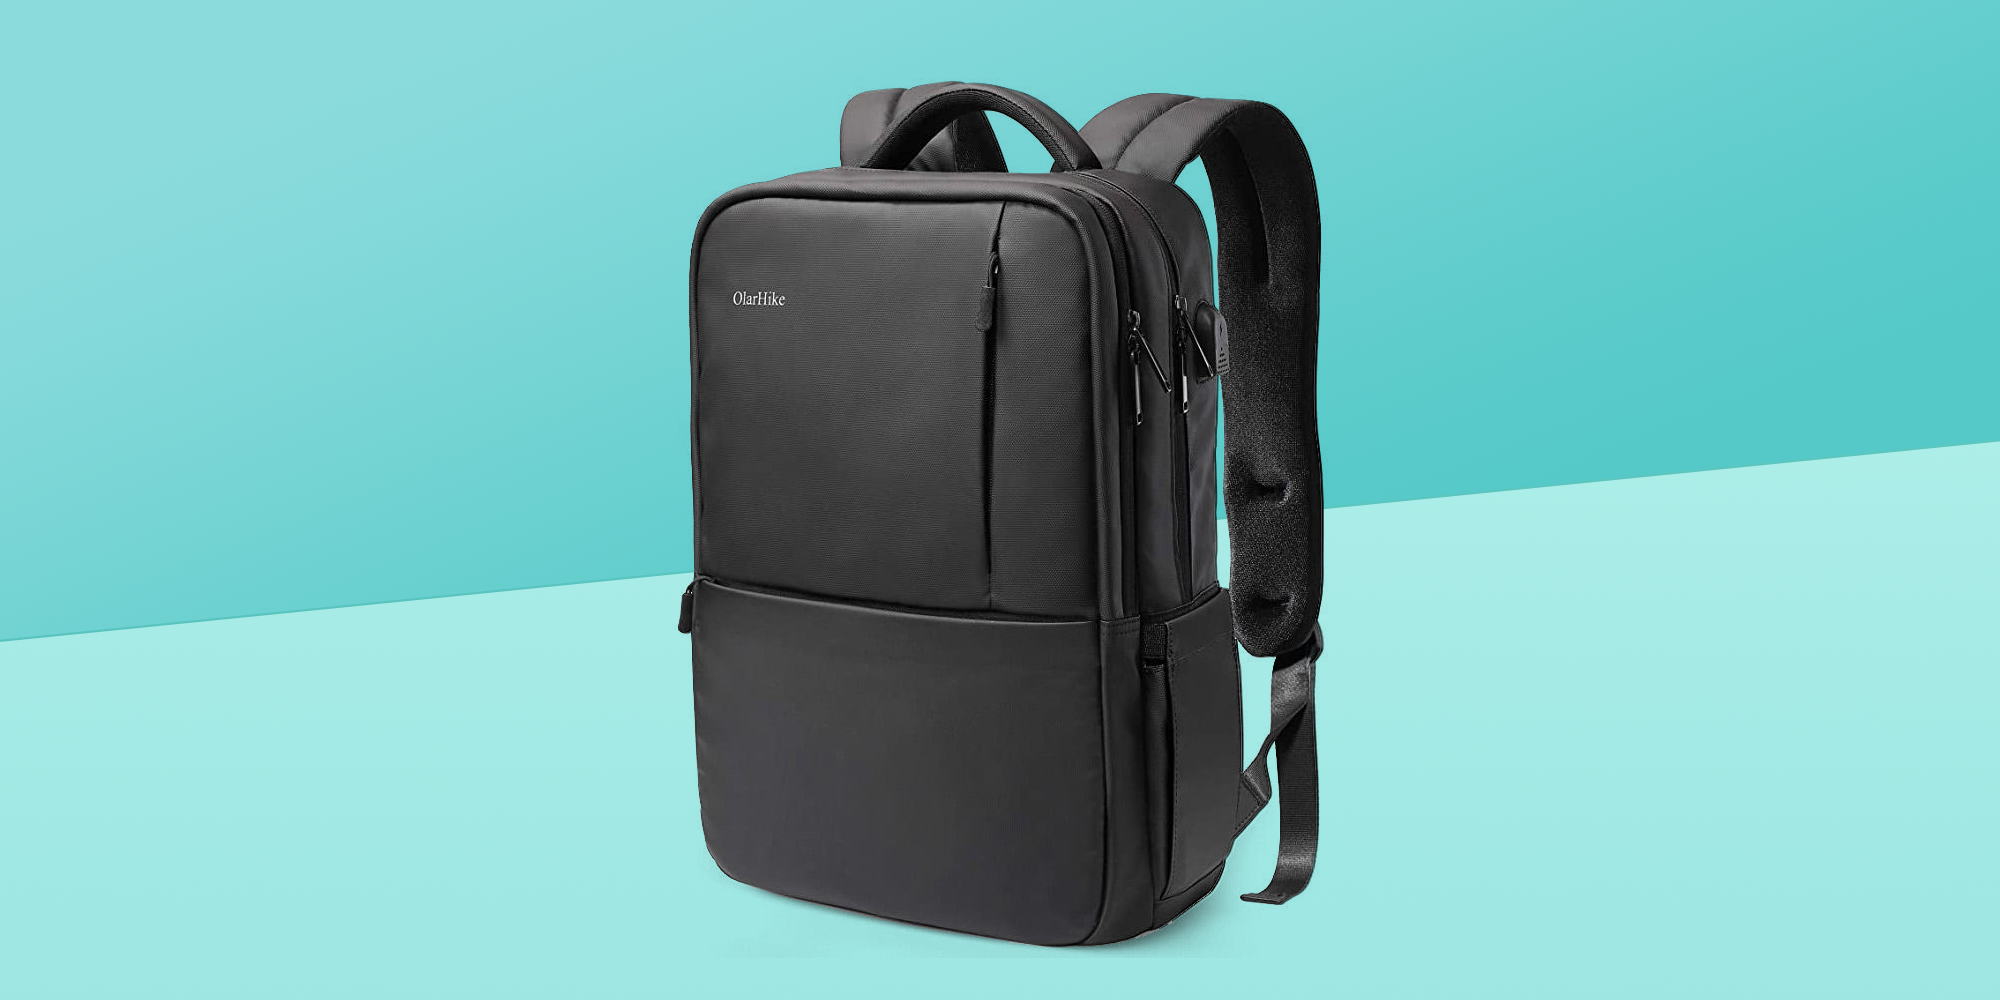 Boys/Girls School Bag Sport Backpack Bookbag Waterproof Travel Light Rucksack